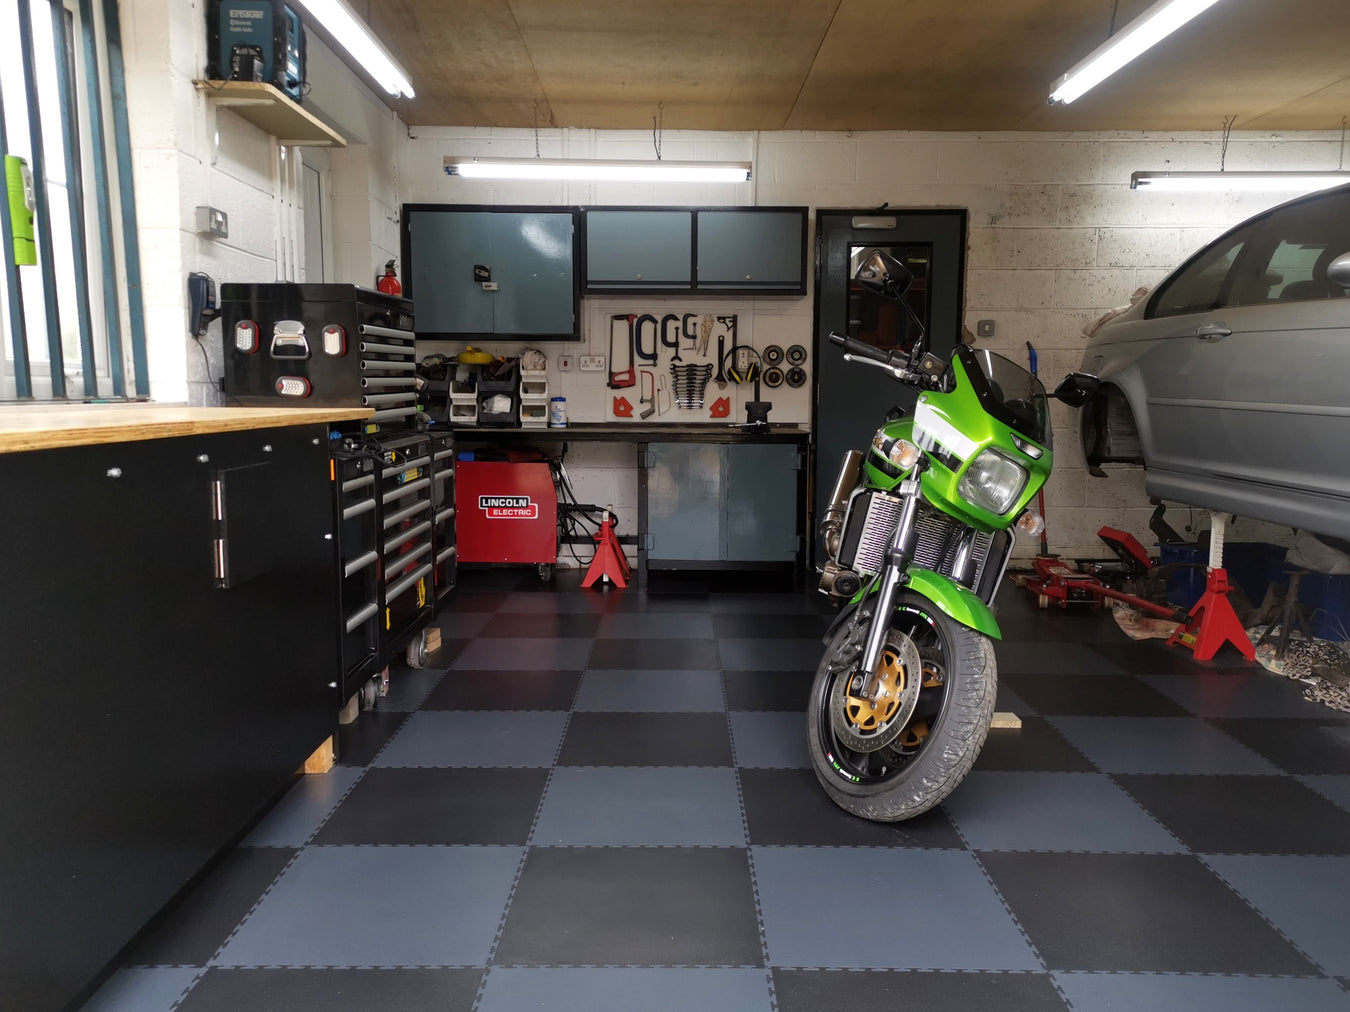 Garage Flooring Tiles with Motorcycle